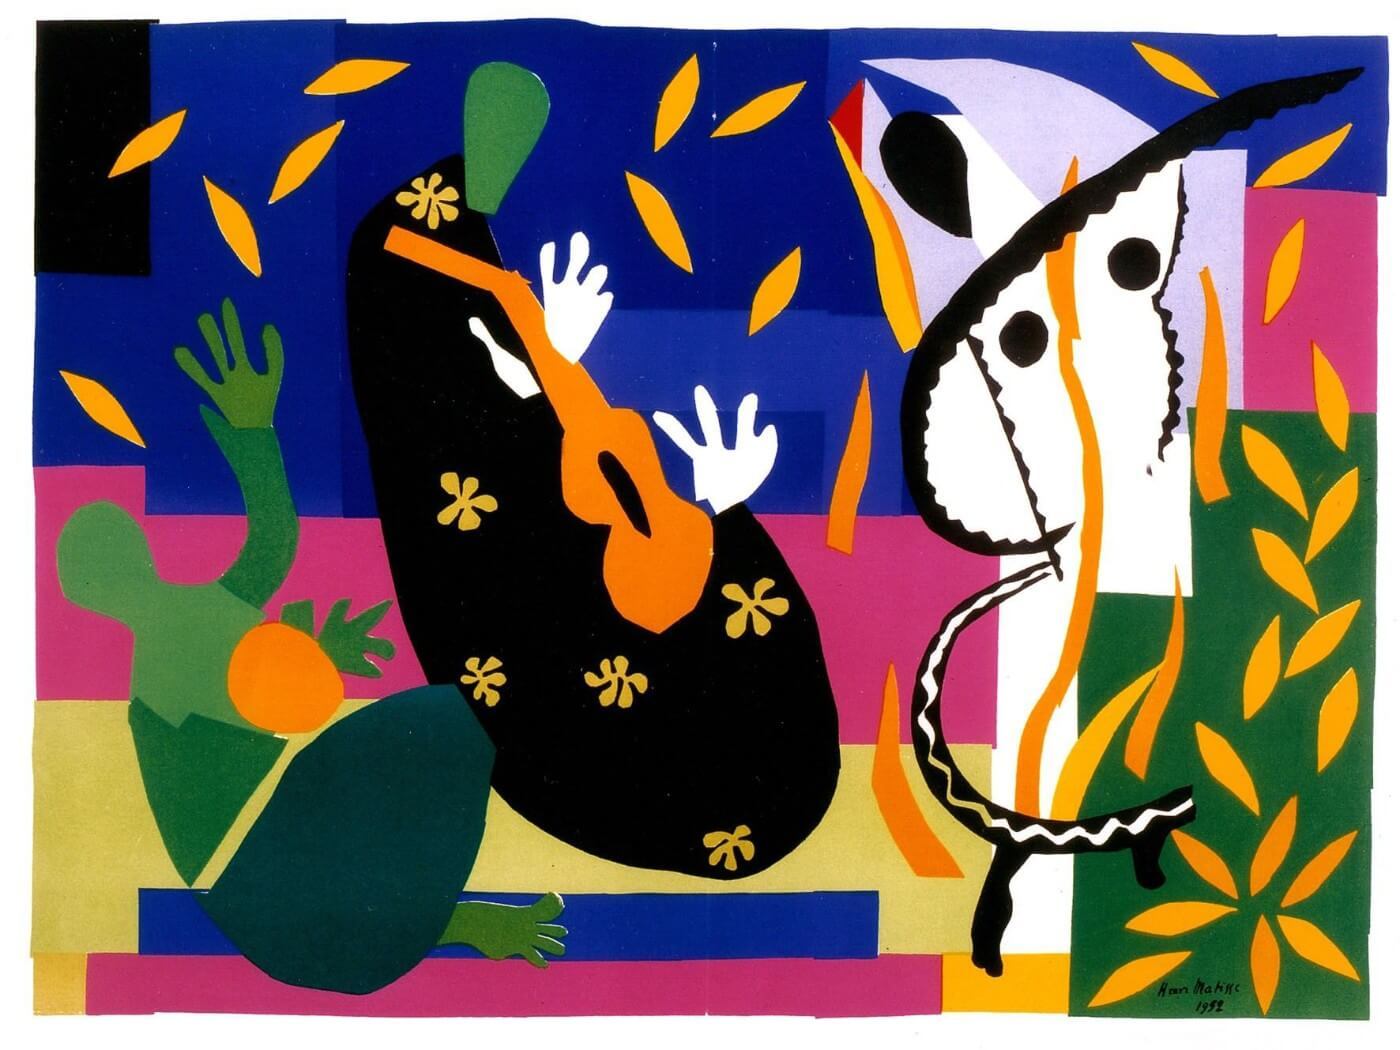 Yellow  Henri Matisse  Art Prints by Henri Matisse  Buy Posters Frames  Canvas  Digital Art Prints  Small Compact Medium and Large Variants